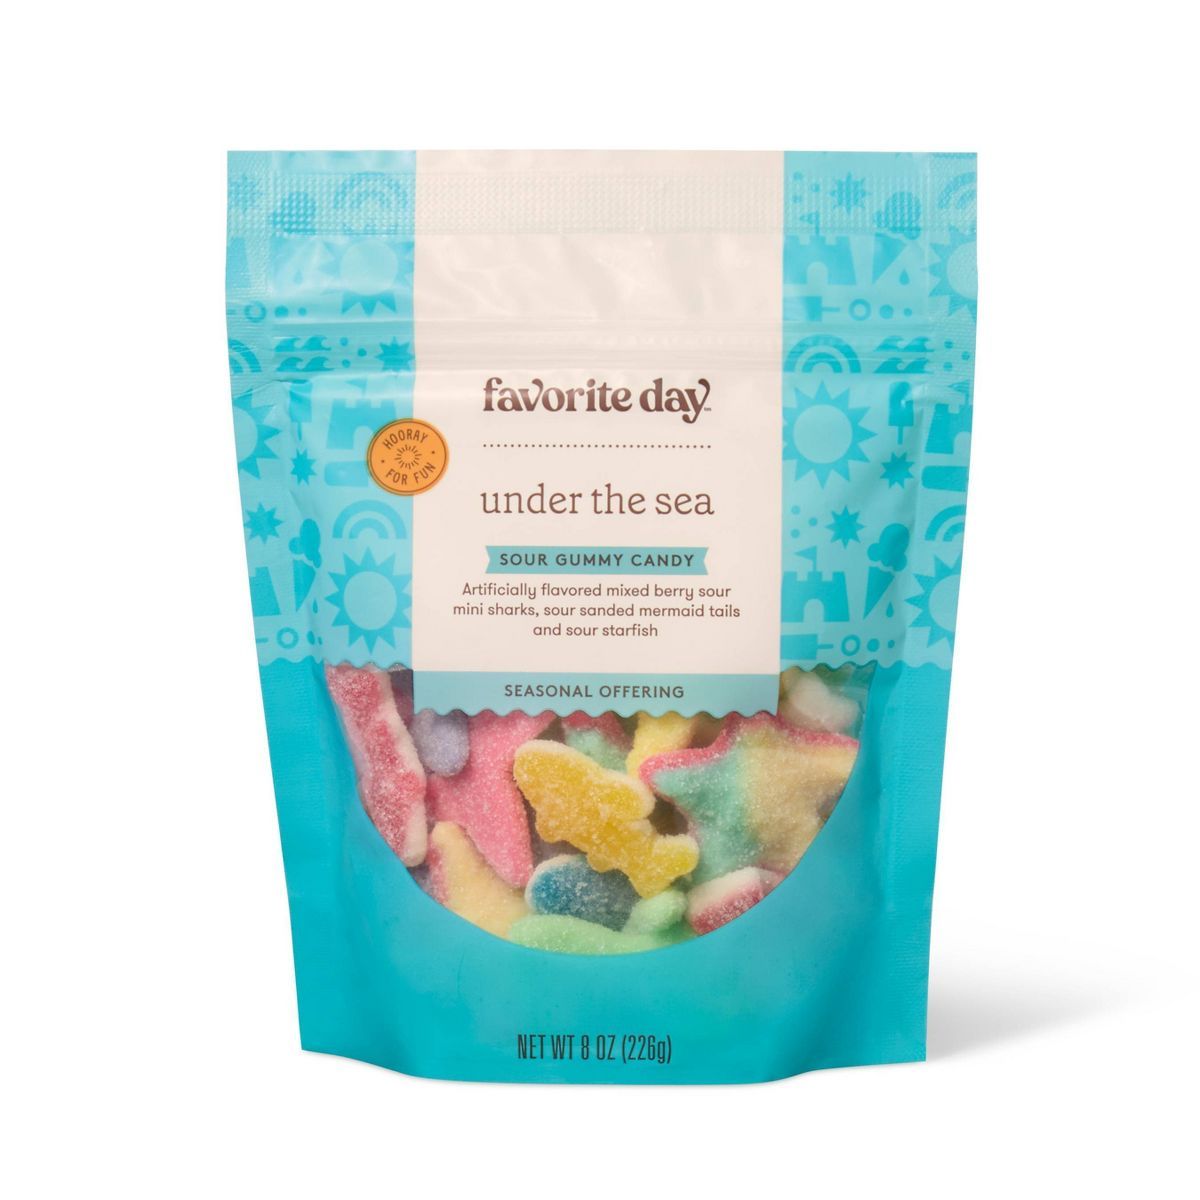 Under the Sea Sour Gummy Candy Bag - 8oz - Favorite Day™ | Target